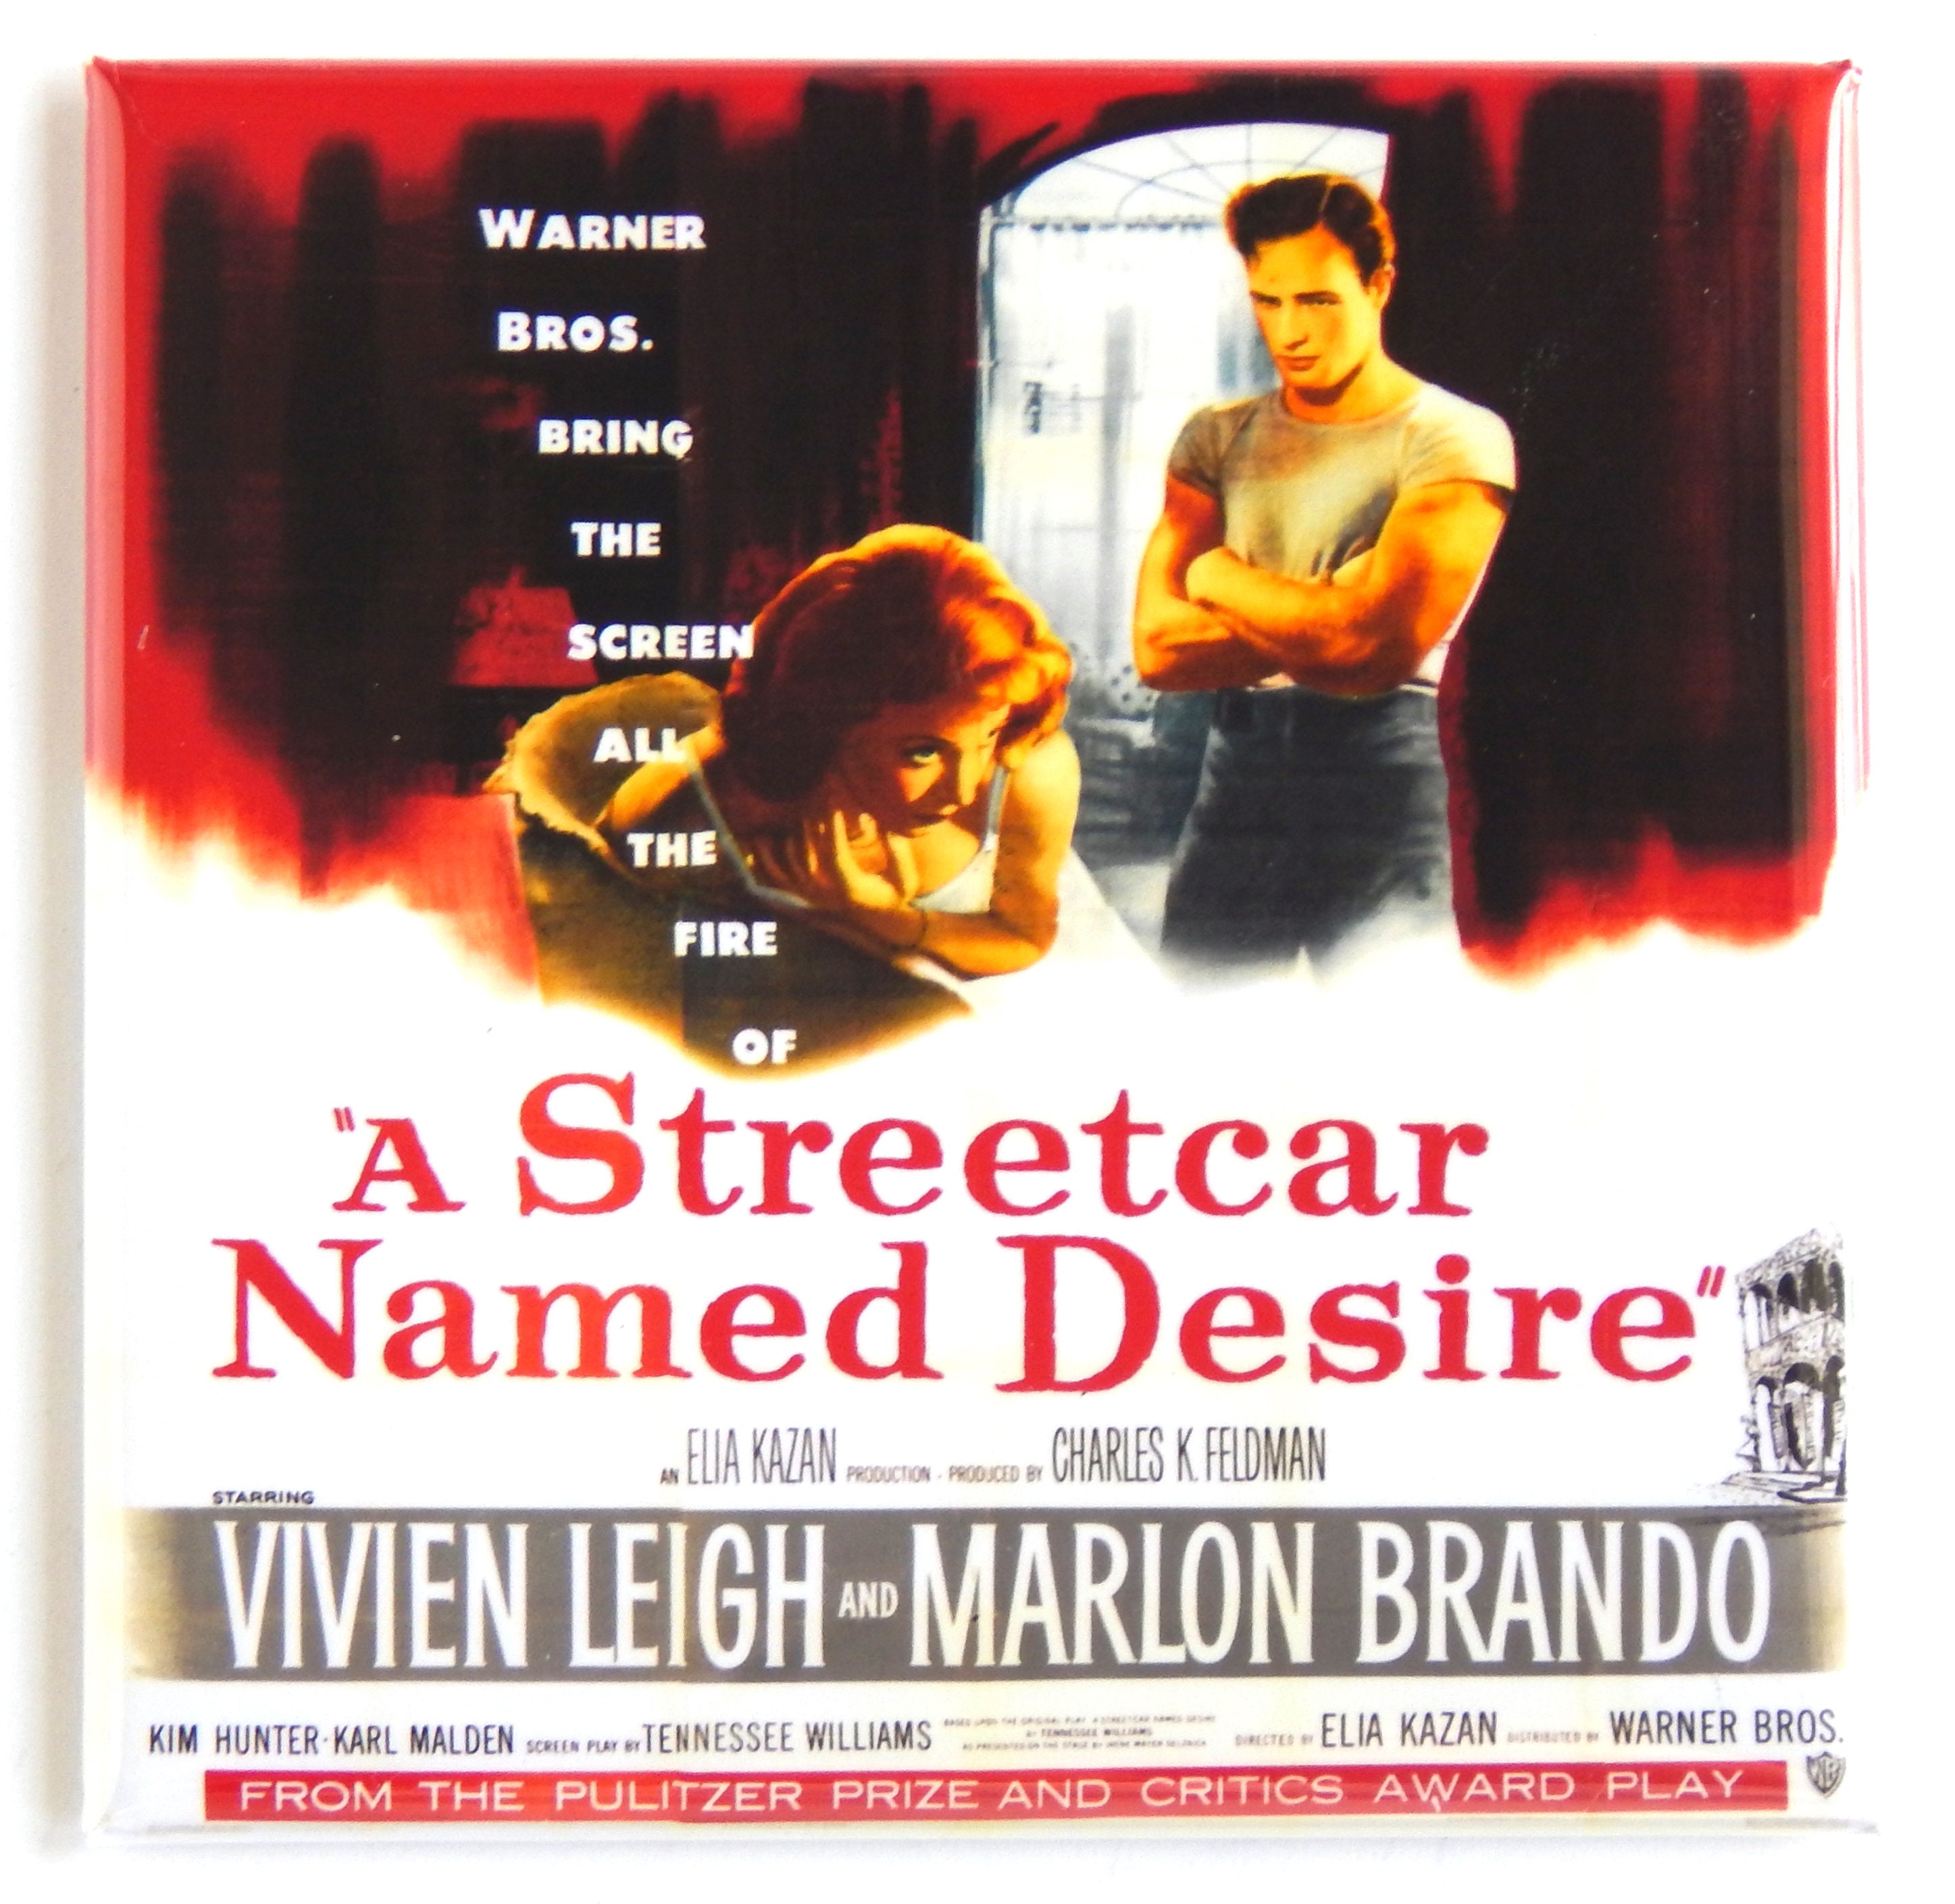 1951 A streetcar named desire Marlon Brando movie poster reprint 19x12.5 inches